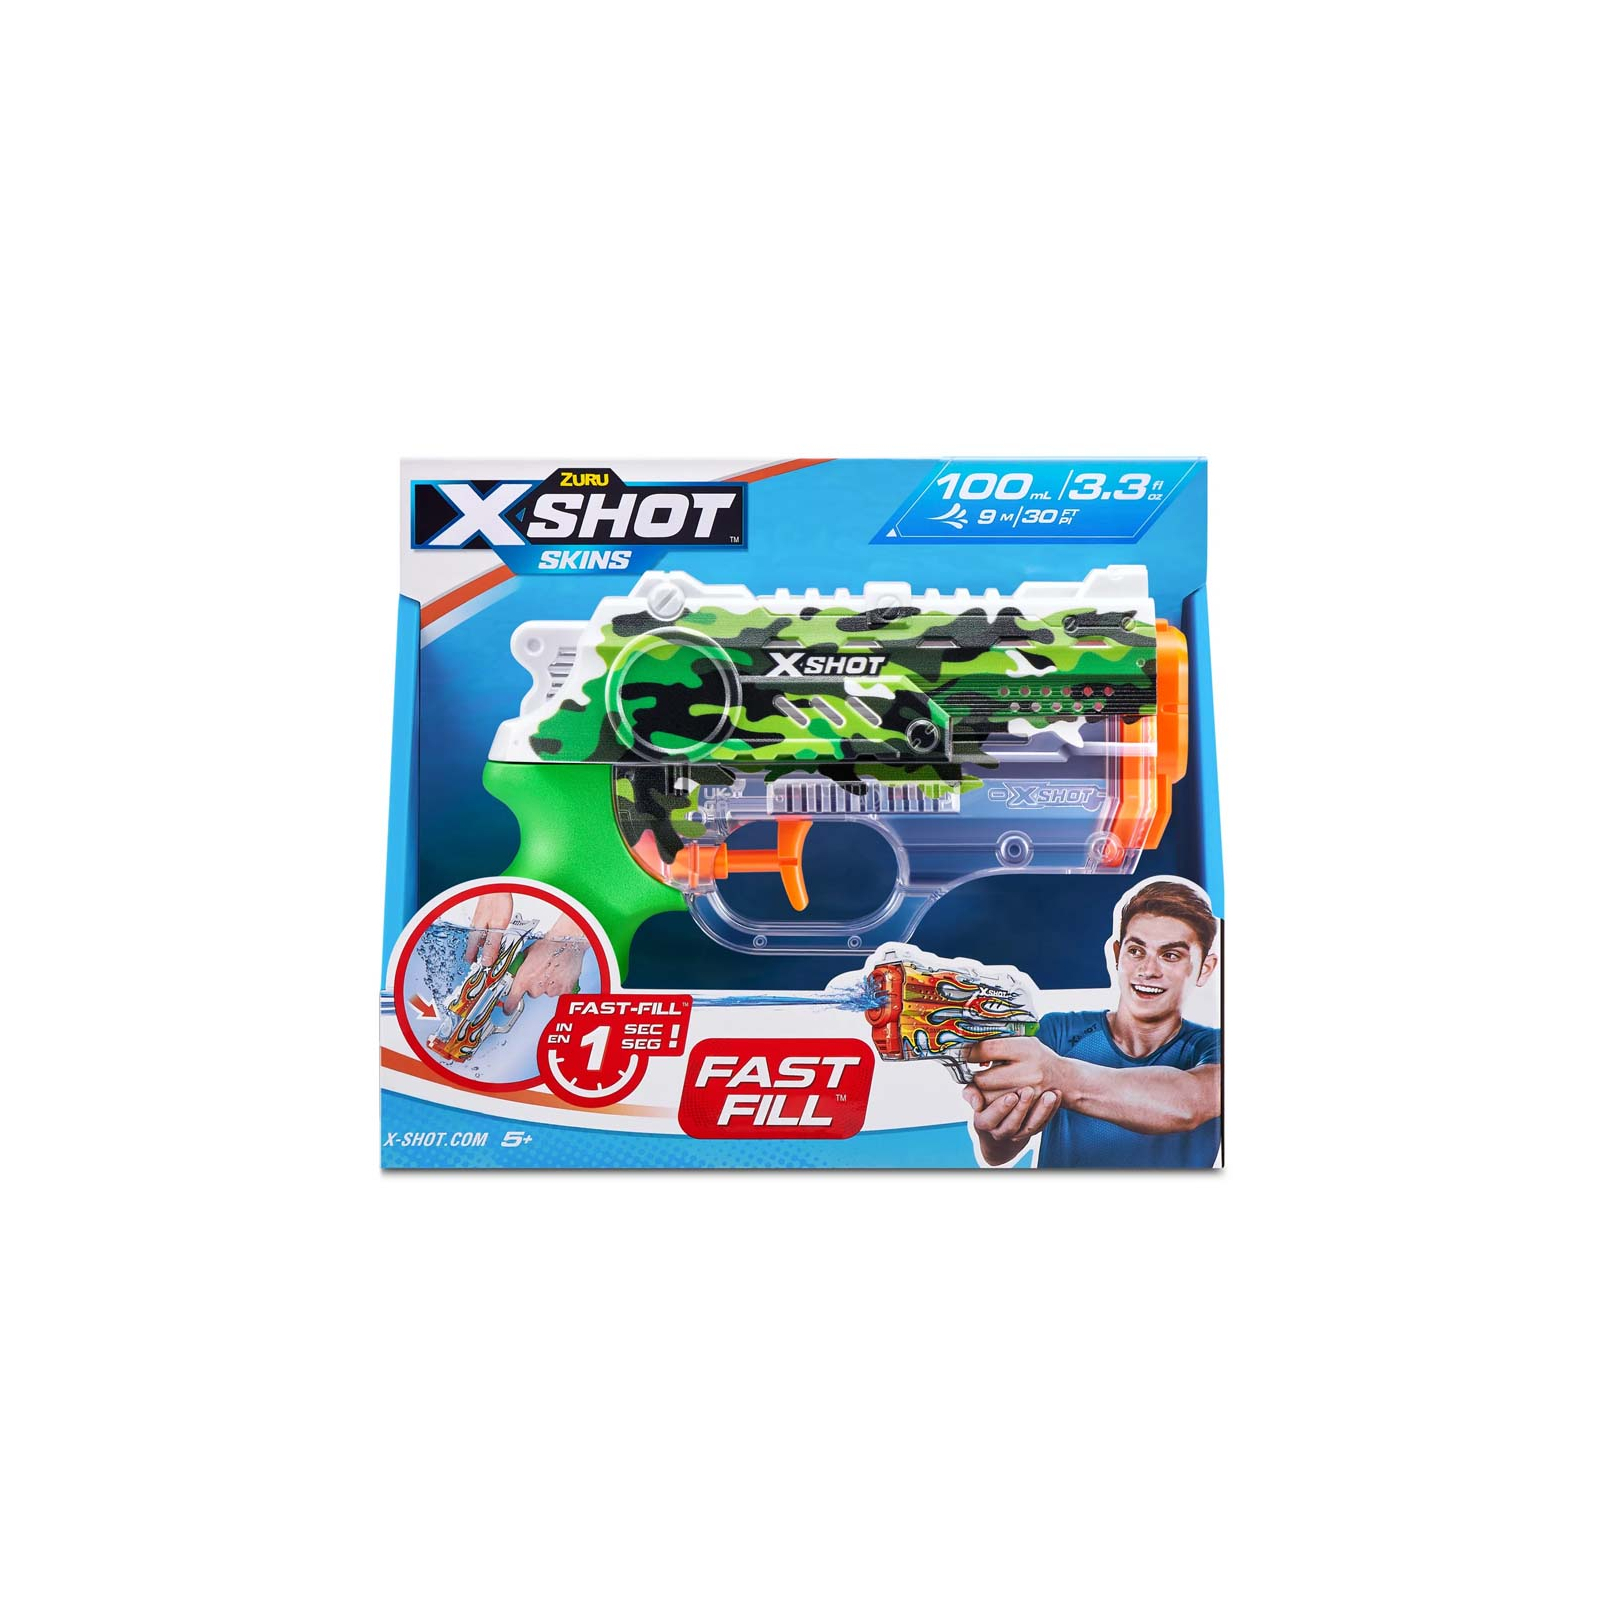 Іграшкова зброя Zuru X -Shot Водний бластер Fast FIill Sins NANO Jungle Camo (11853B) зображення 3